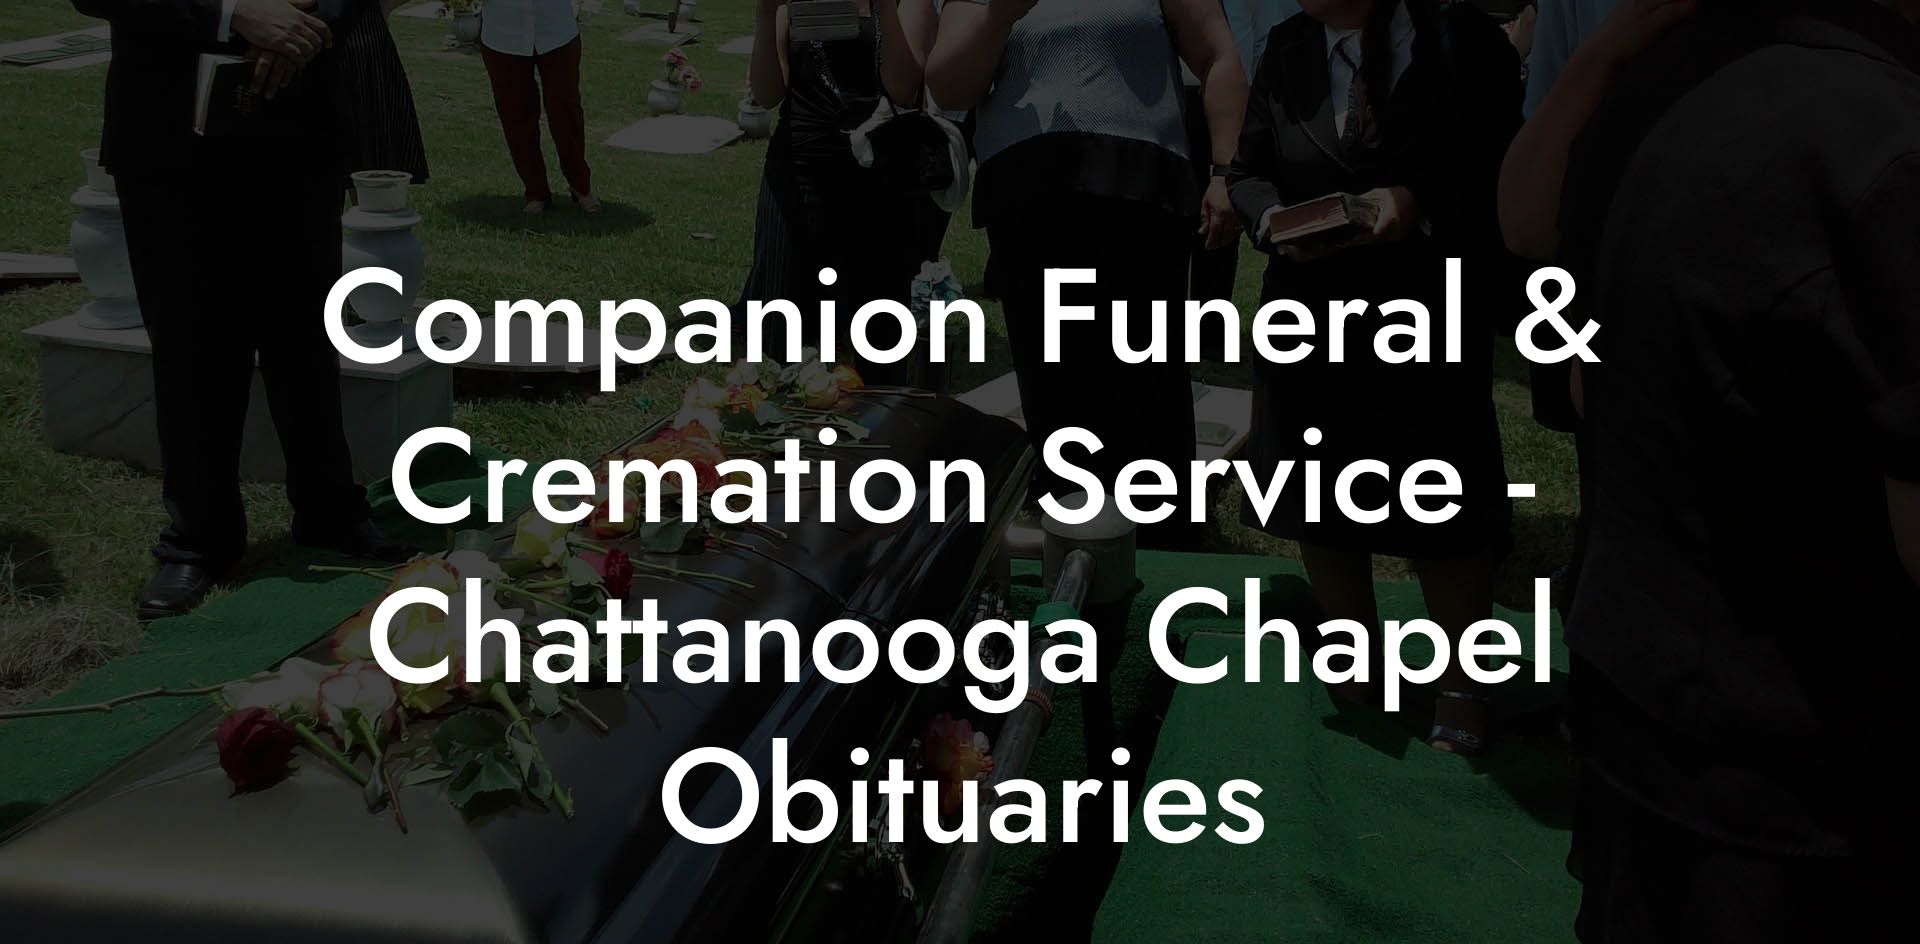 Companion Funeral & Cremation Service - Chattanooga Chapel Obituaries